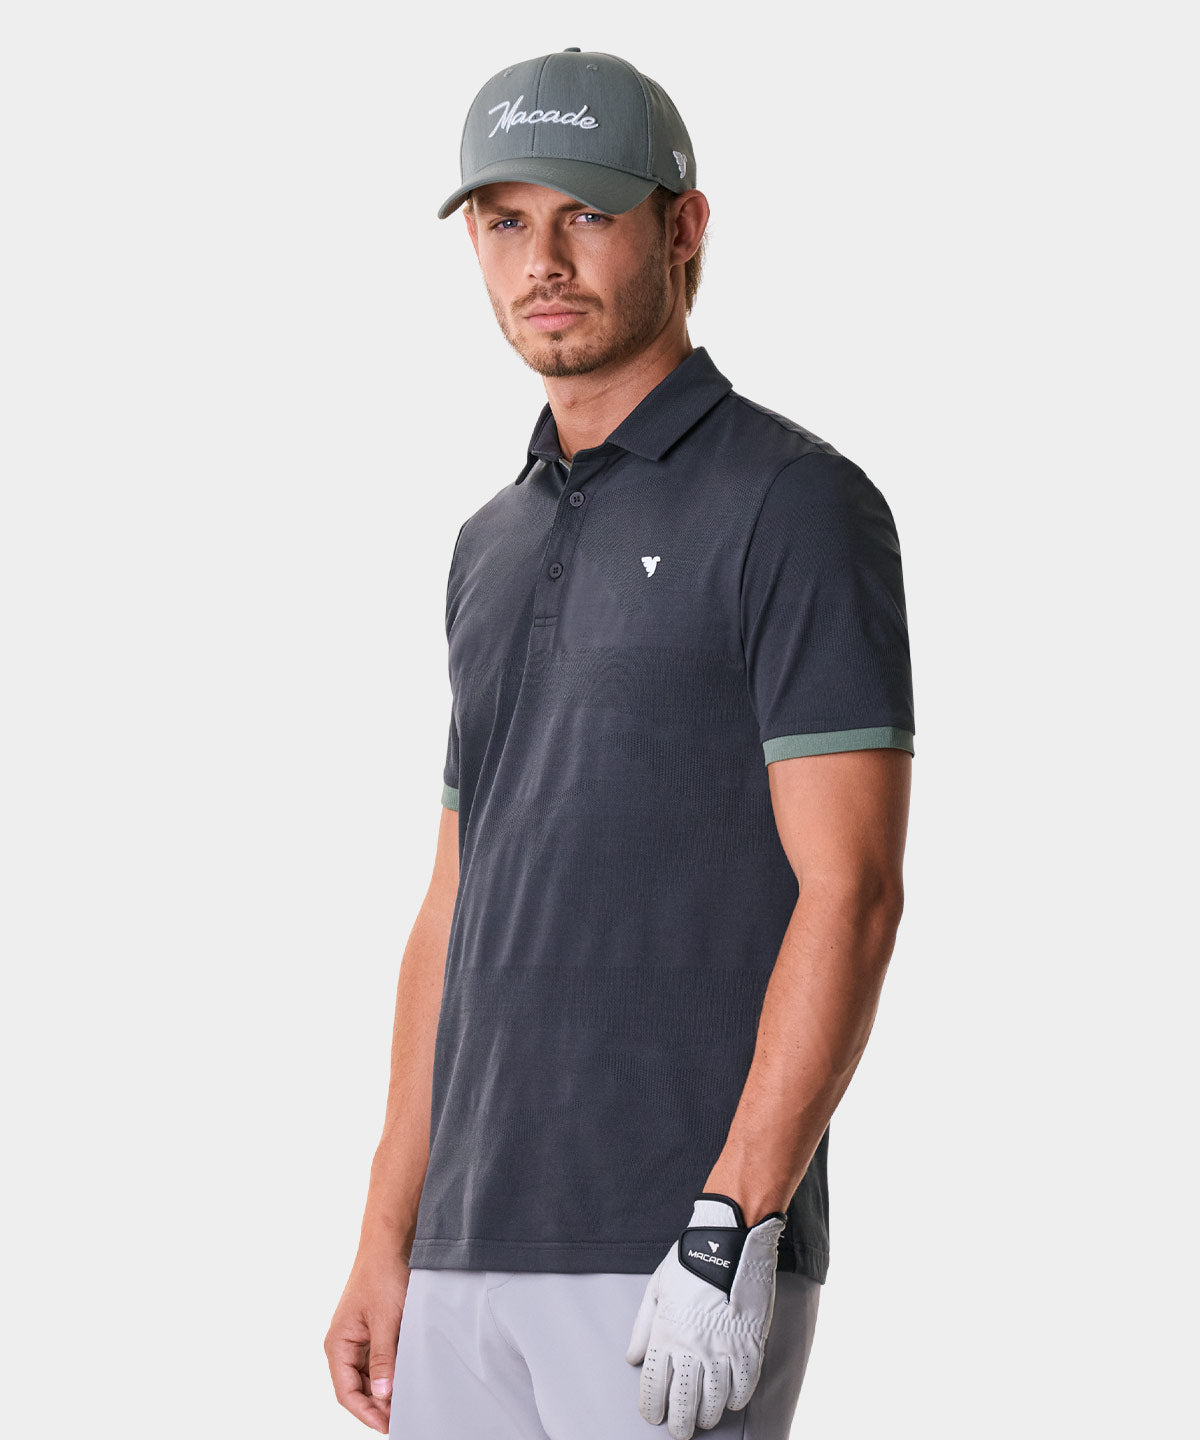 Cole Grey Performance Shirt Macade Golf